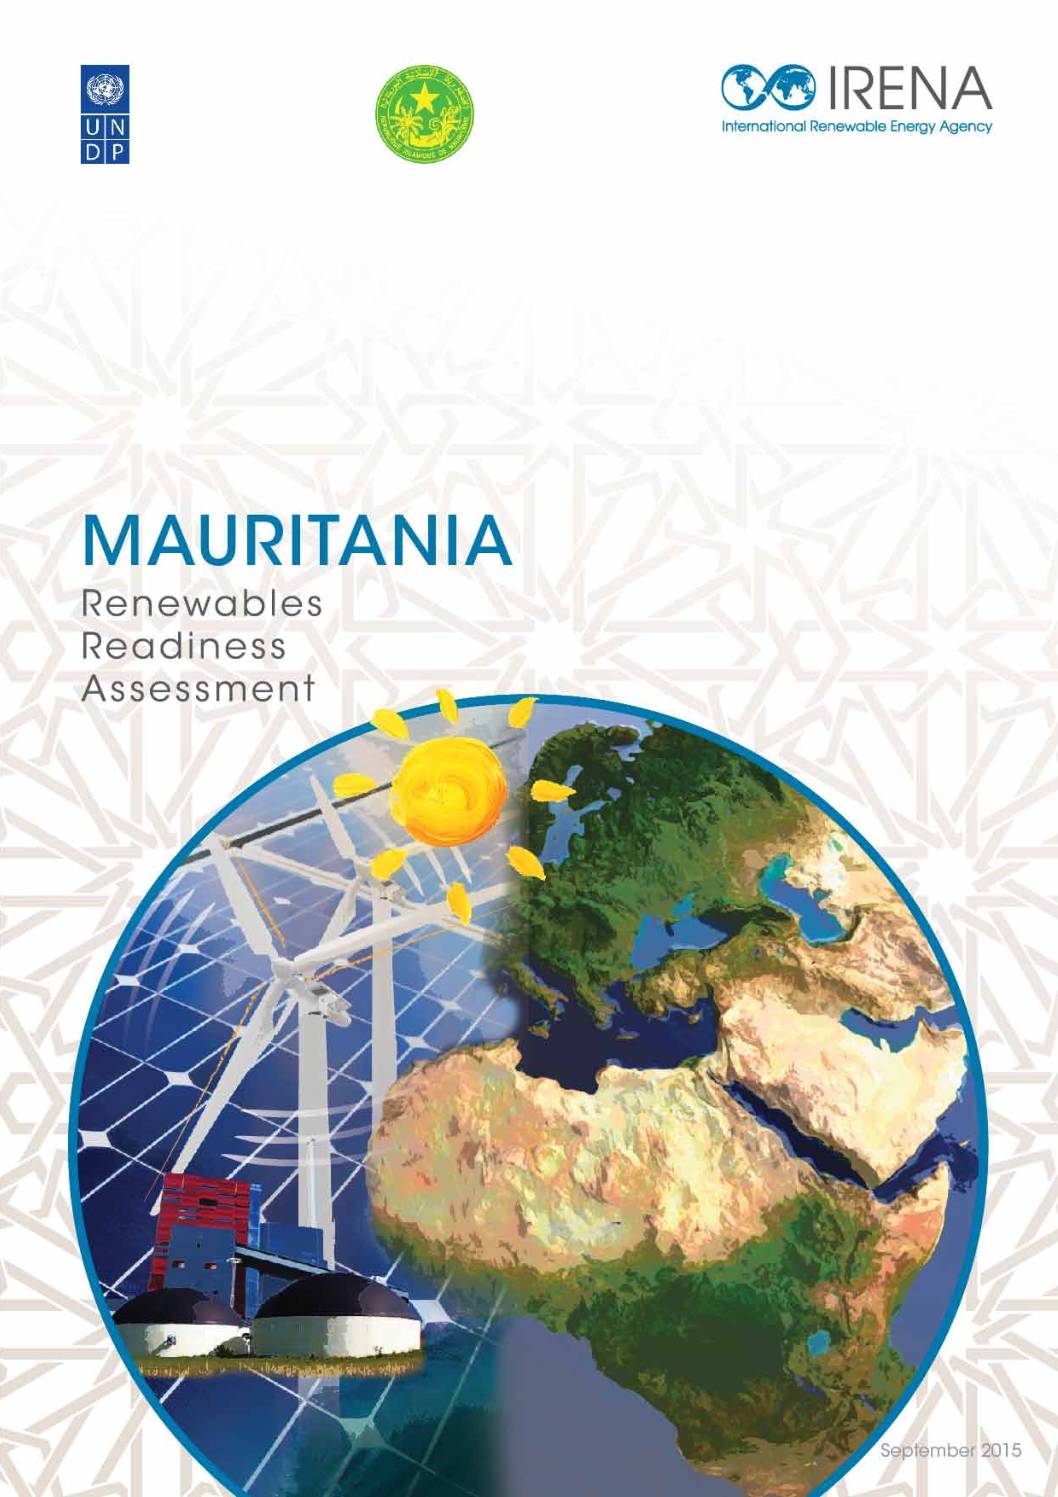 Renewables Readiness Assessment: Mauritania